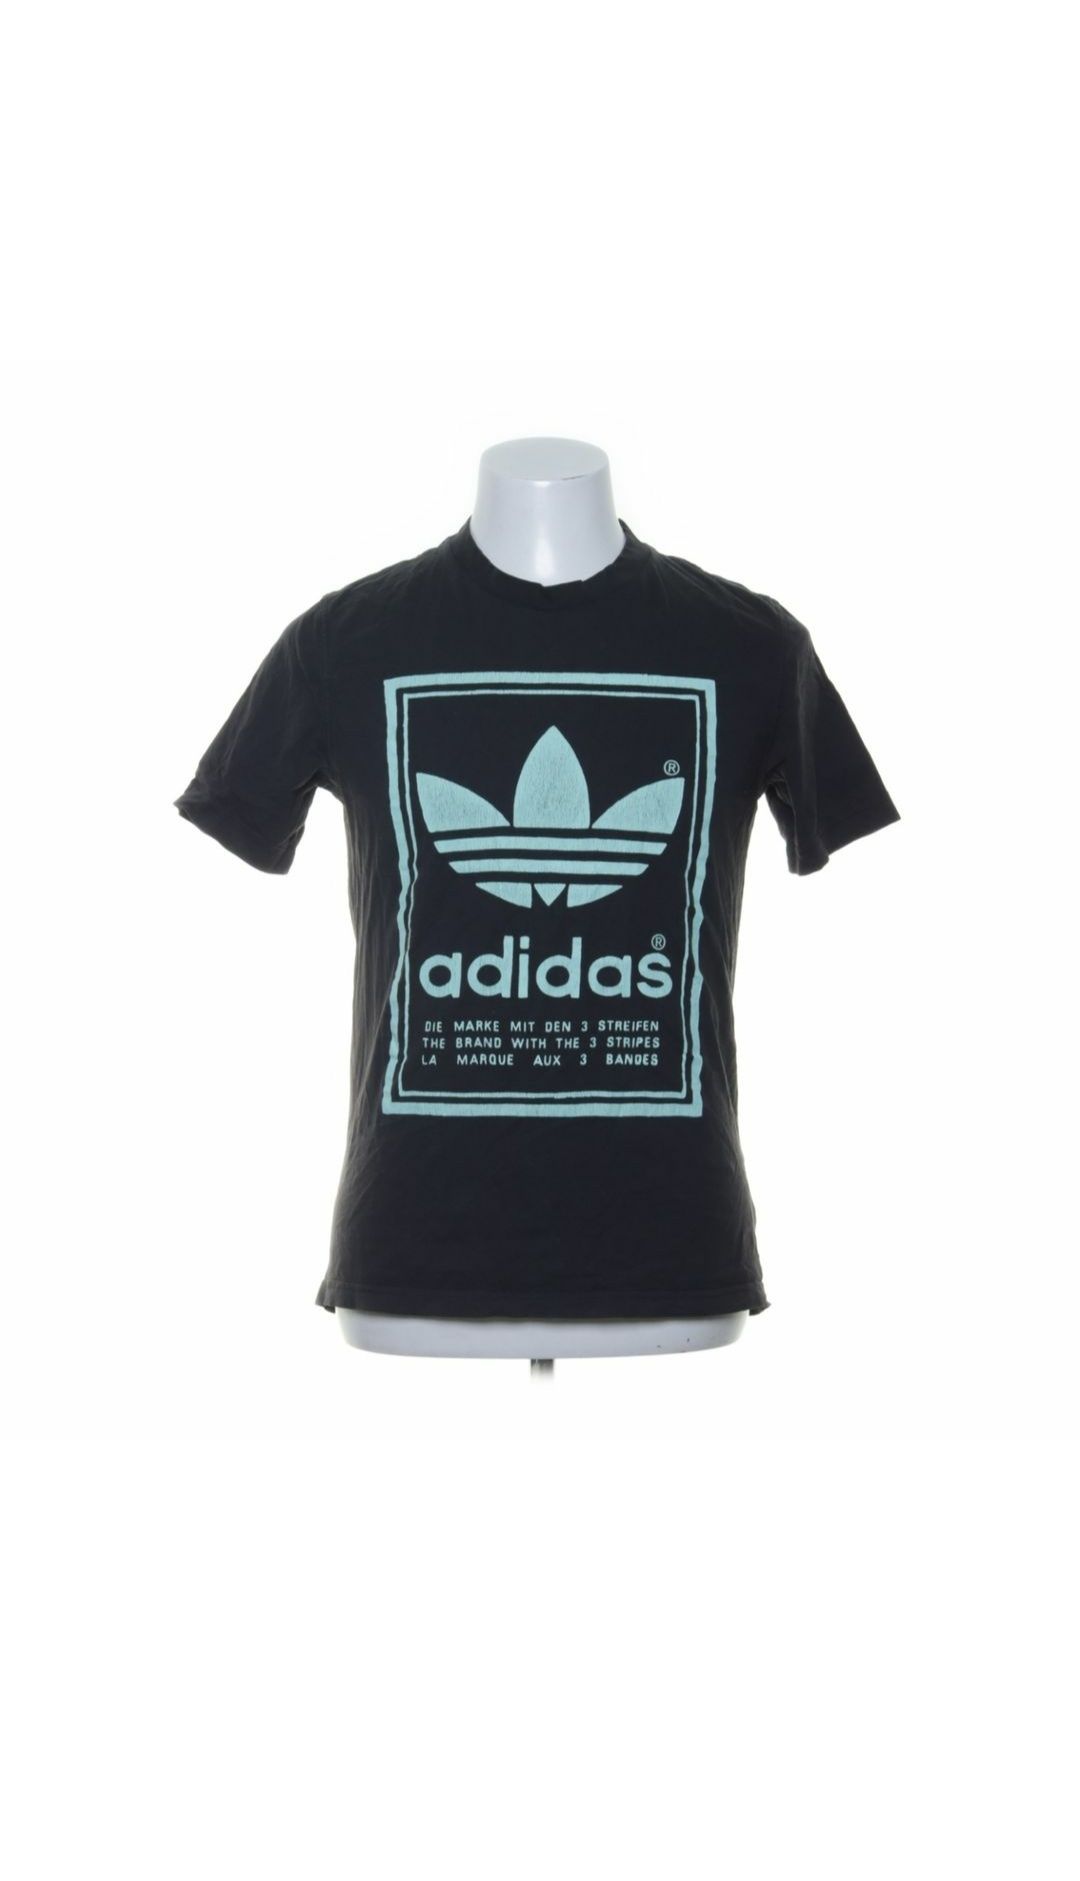 50 tricouri originale Adidas Angro 40 lei/buc. Suceava • OLX.ro